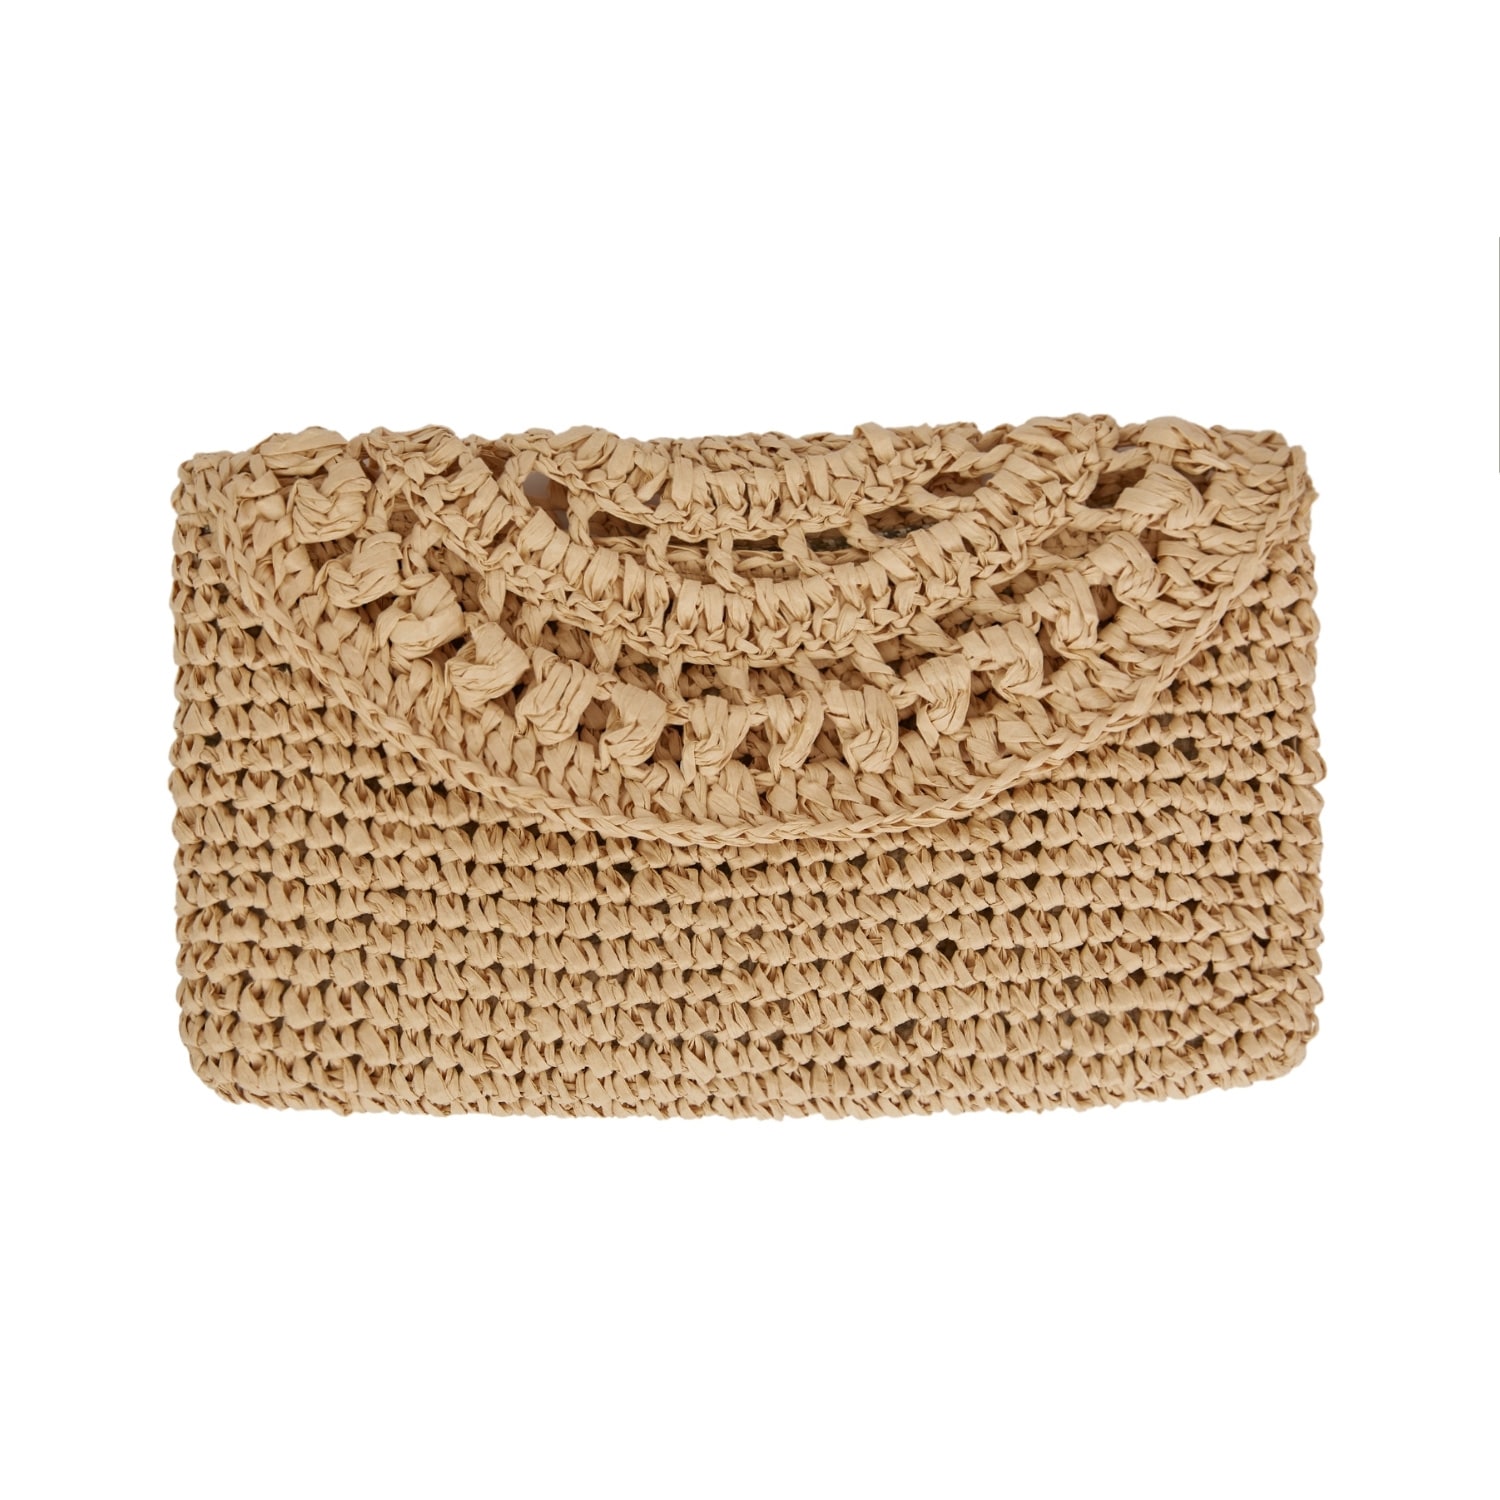 N'onat Women's Neutrals Cunda Crochet Clutch Bag In Neutral Beige In Brown